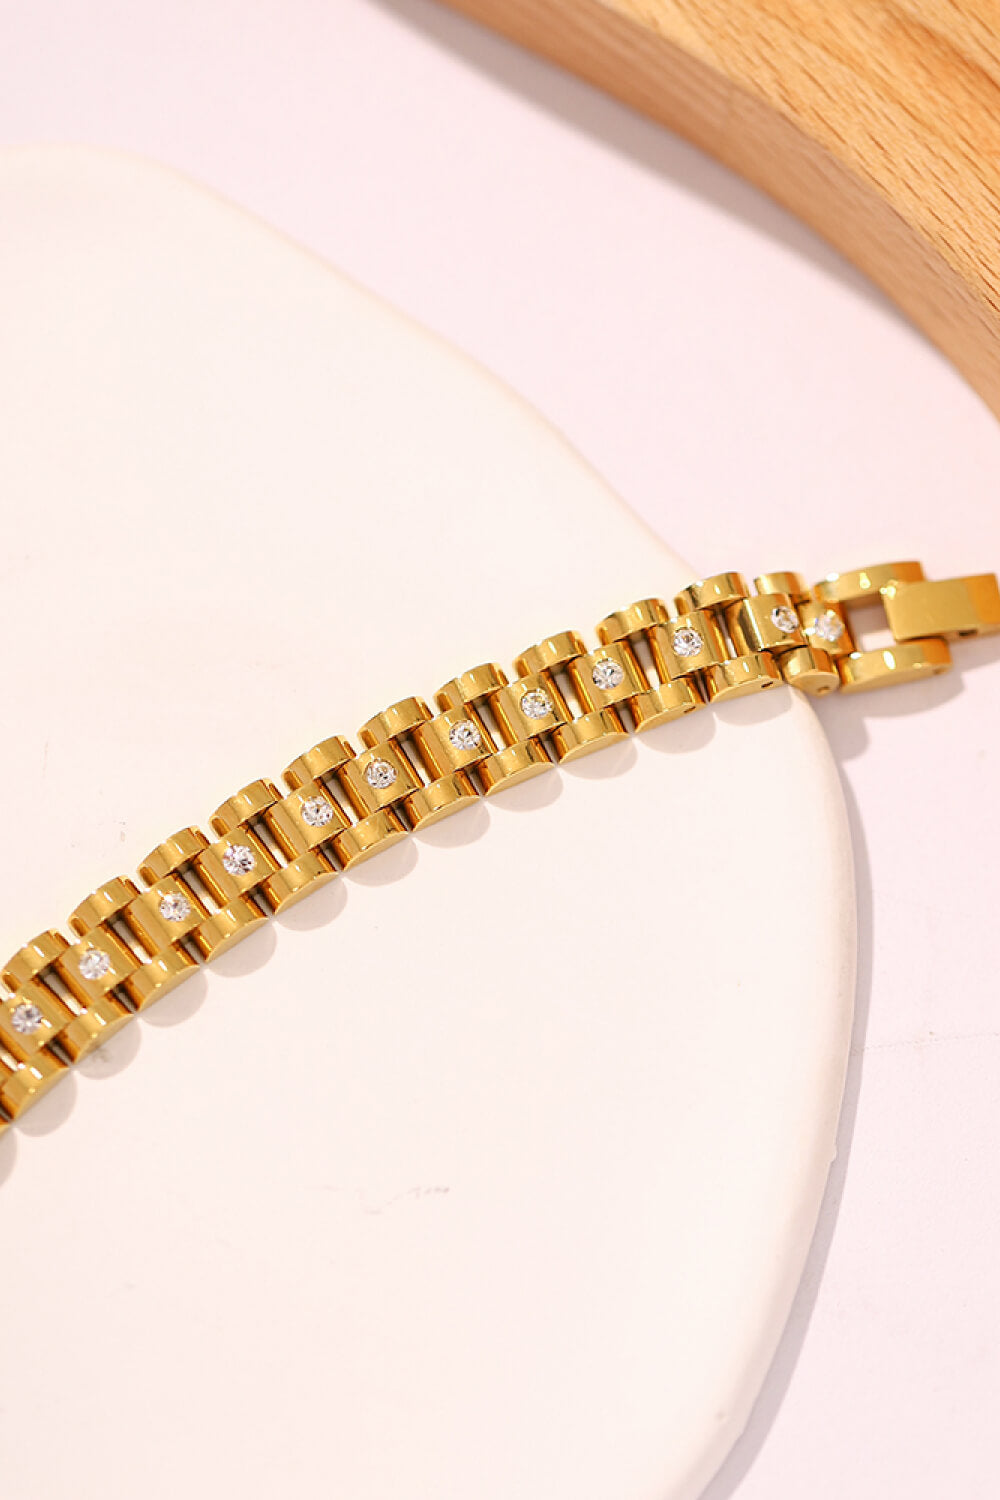 18K Gold-Plated Watch Band Bracelet - Gold / One Size - Women’s Jewelry - Bracelets - 4 - 2024